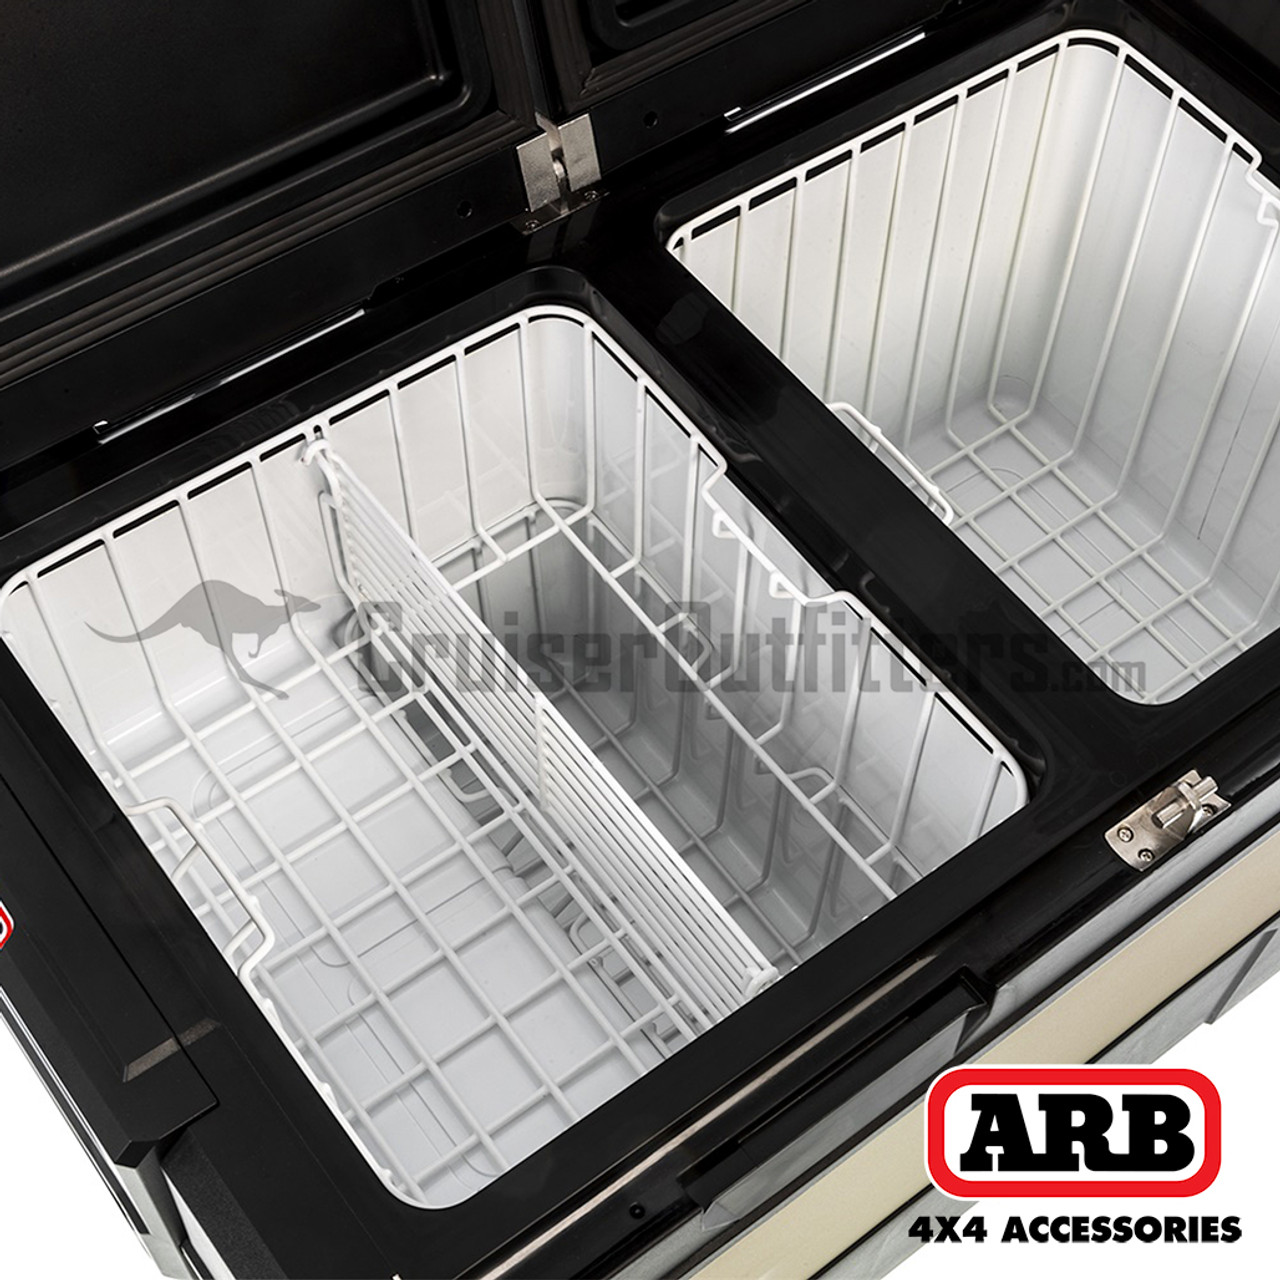 ARB Zero Fridge Freezer Dual Zone - 101 Qt (ARB10802962)